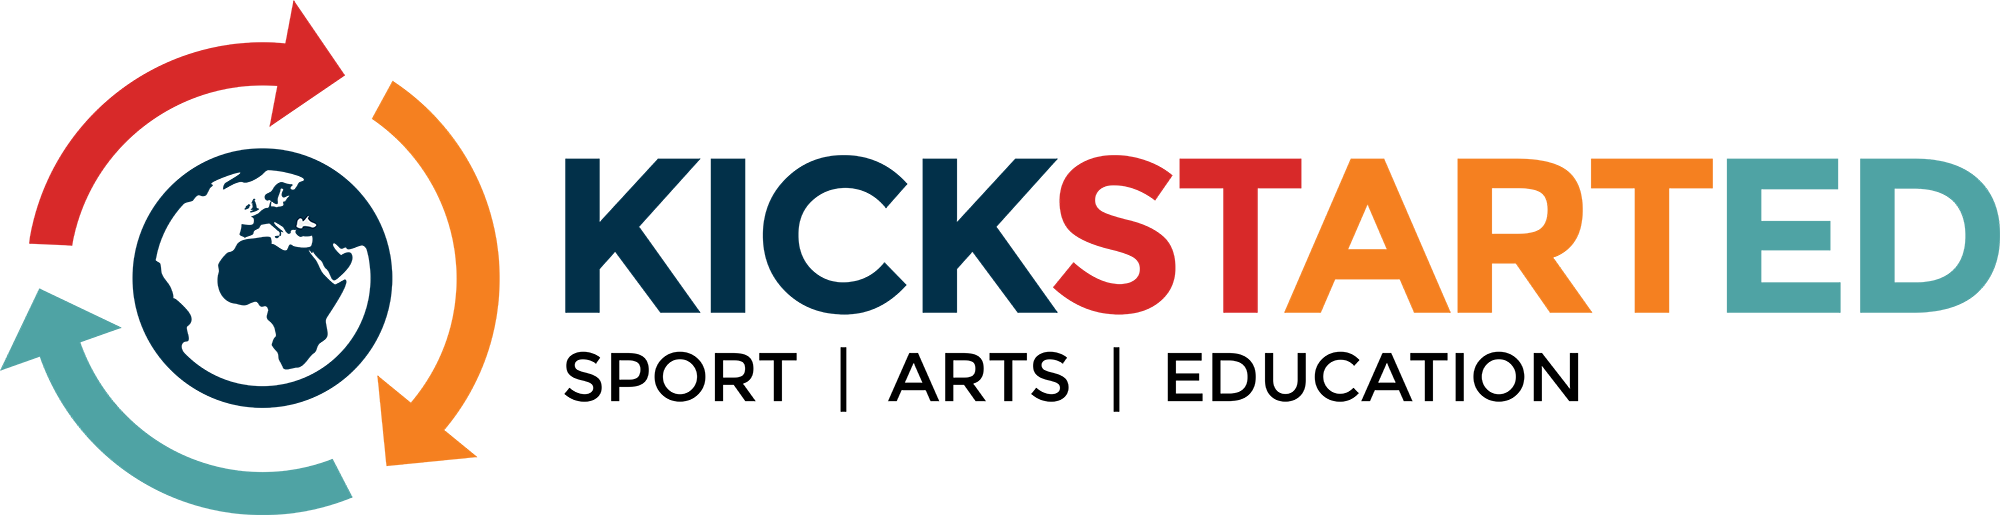 Kickstarted logo